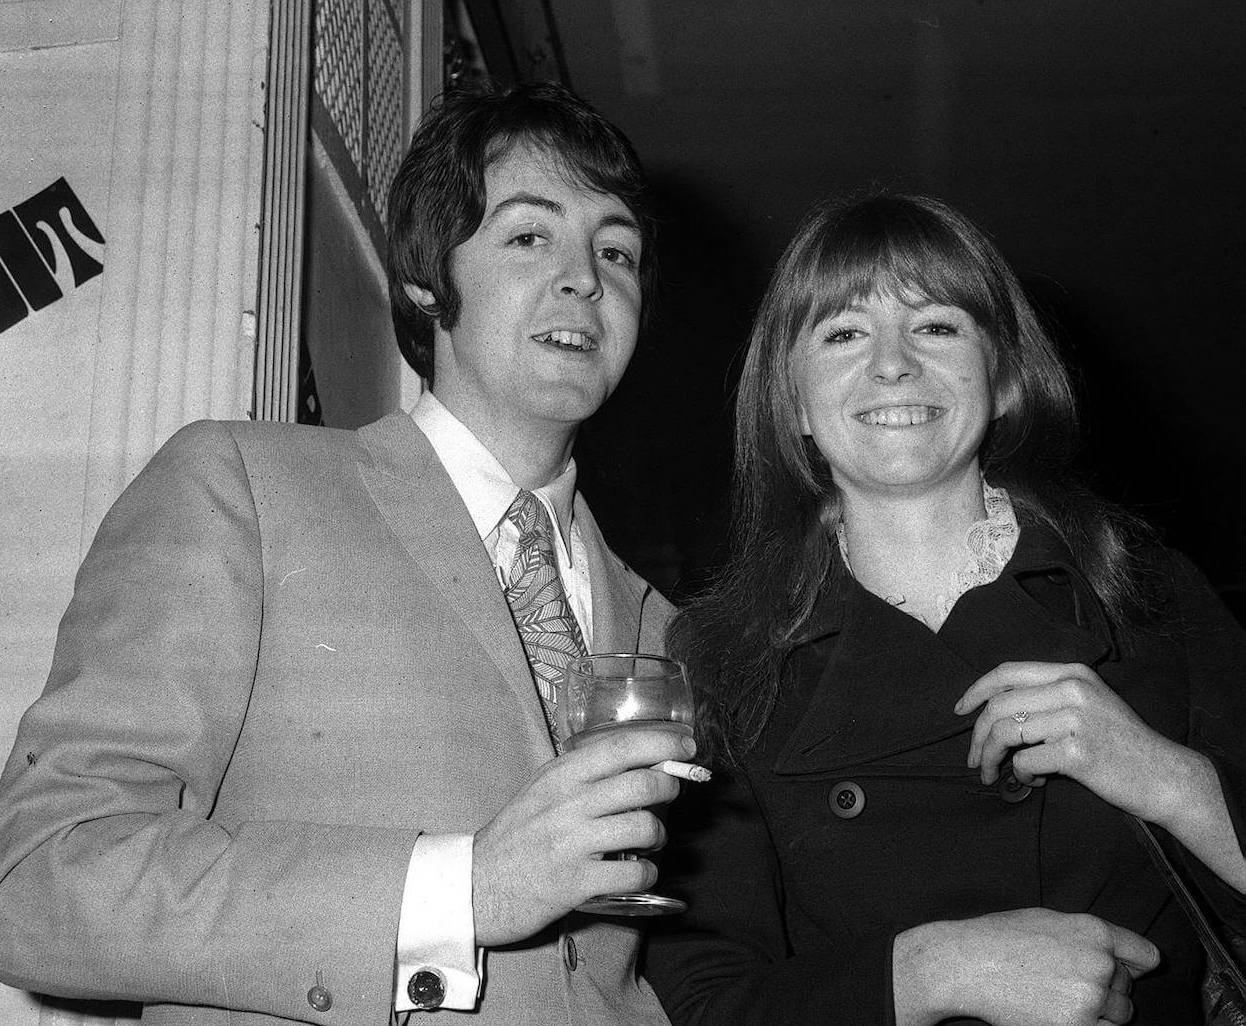 Paul McCartney standing next to Jane Asher.